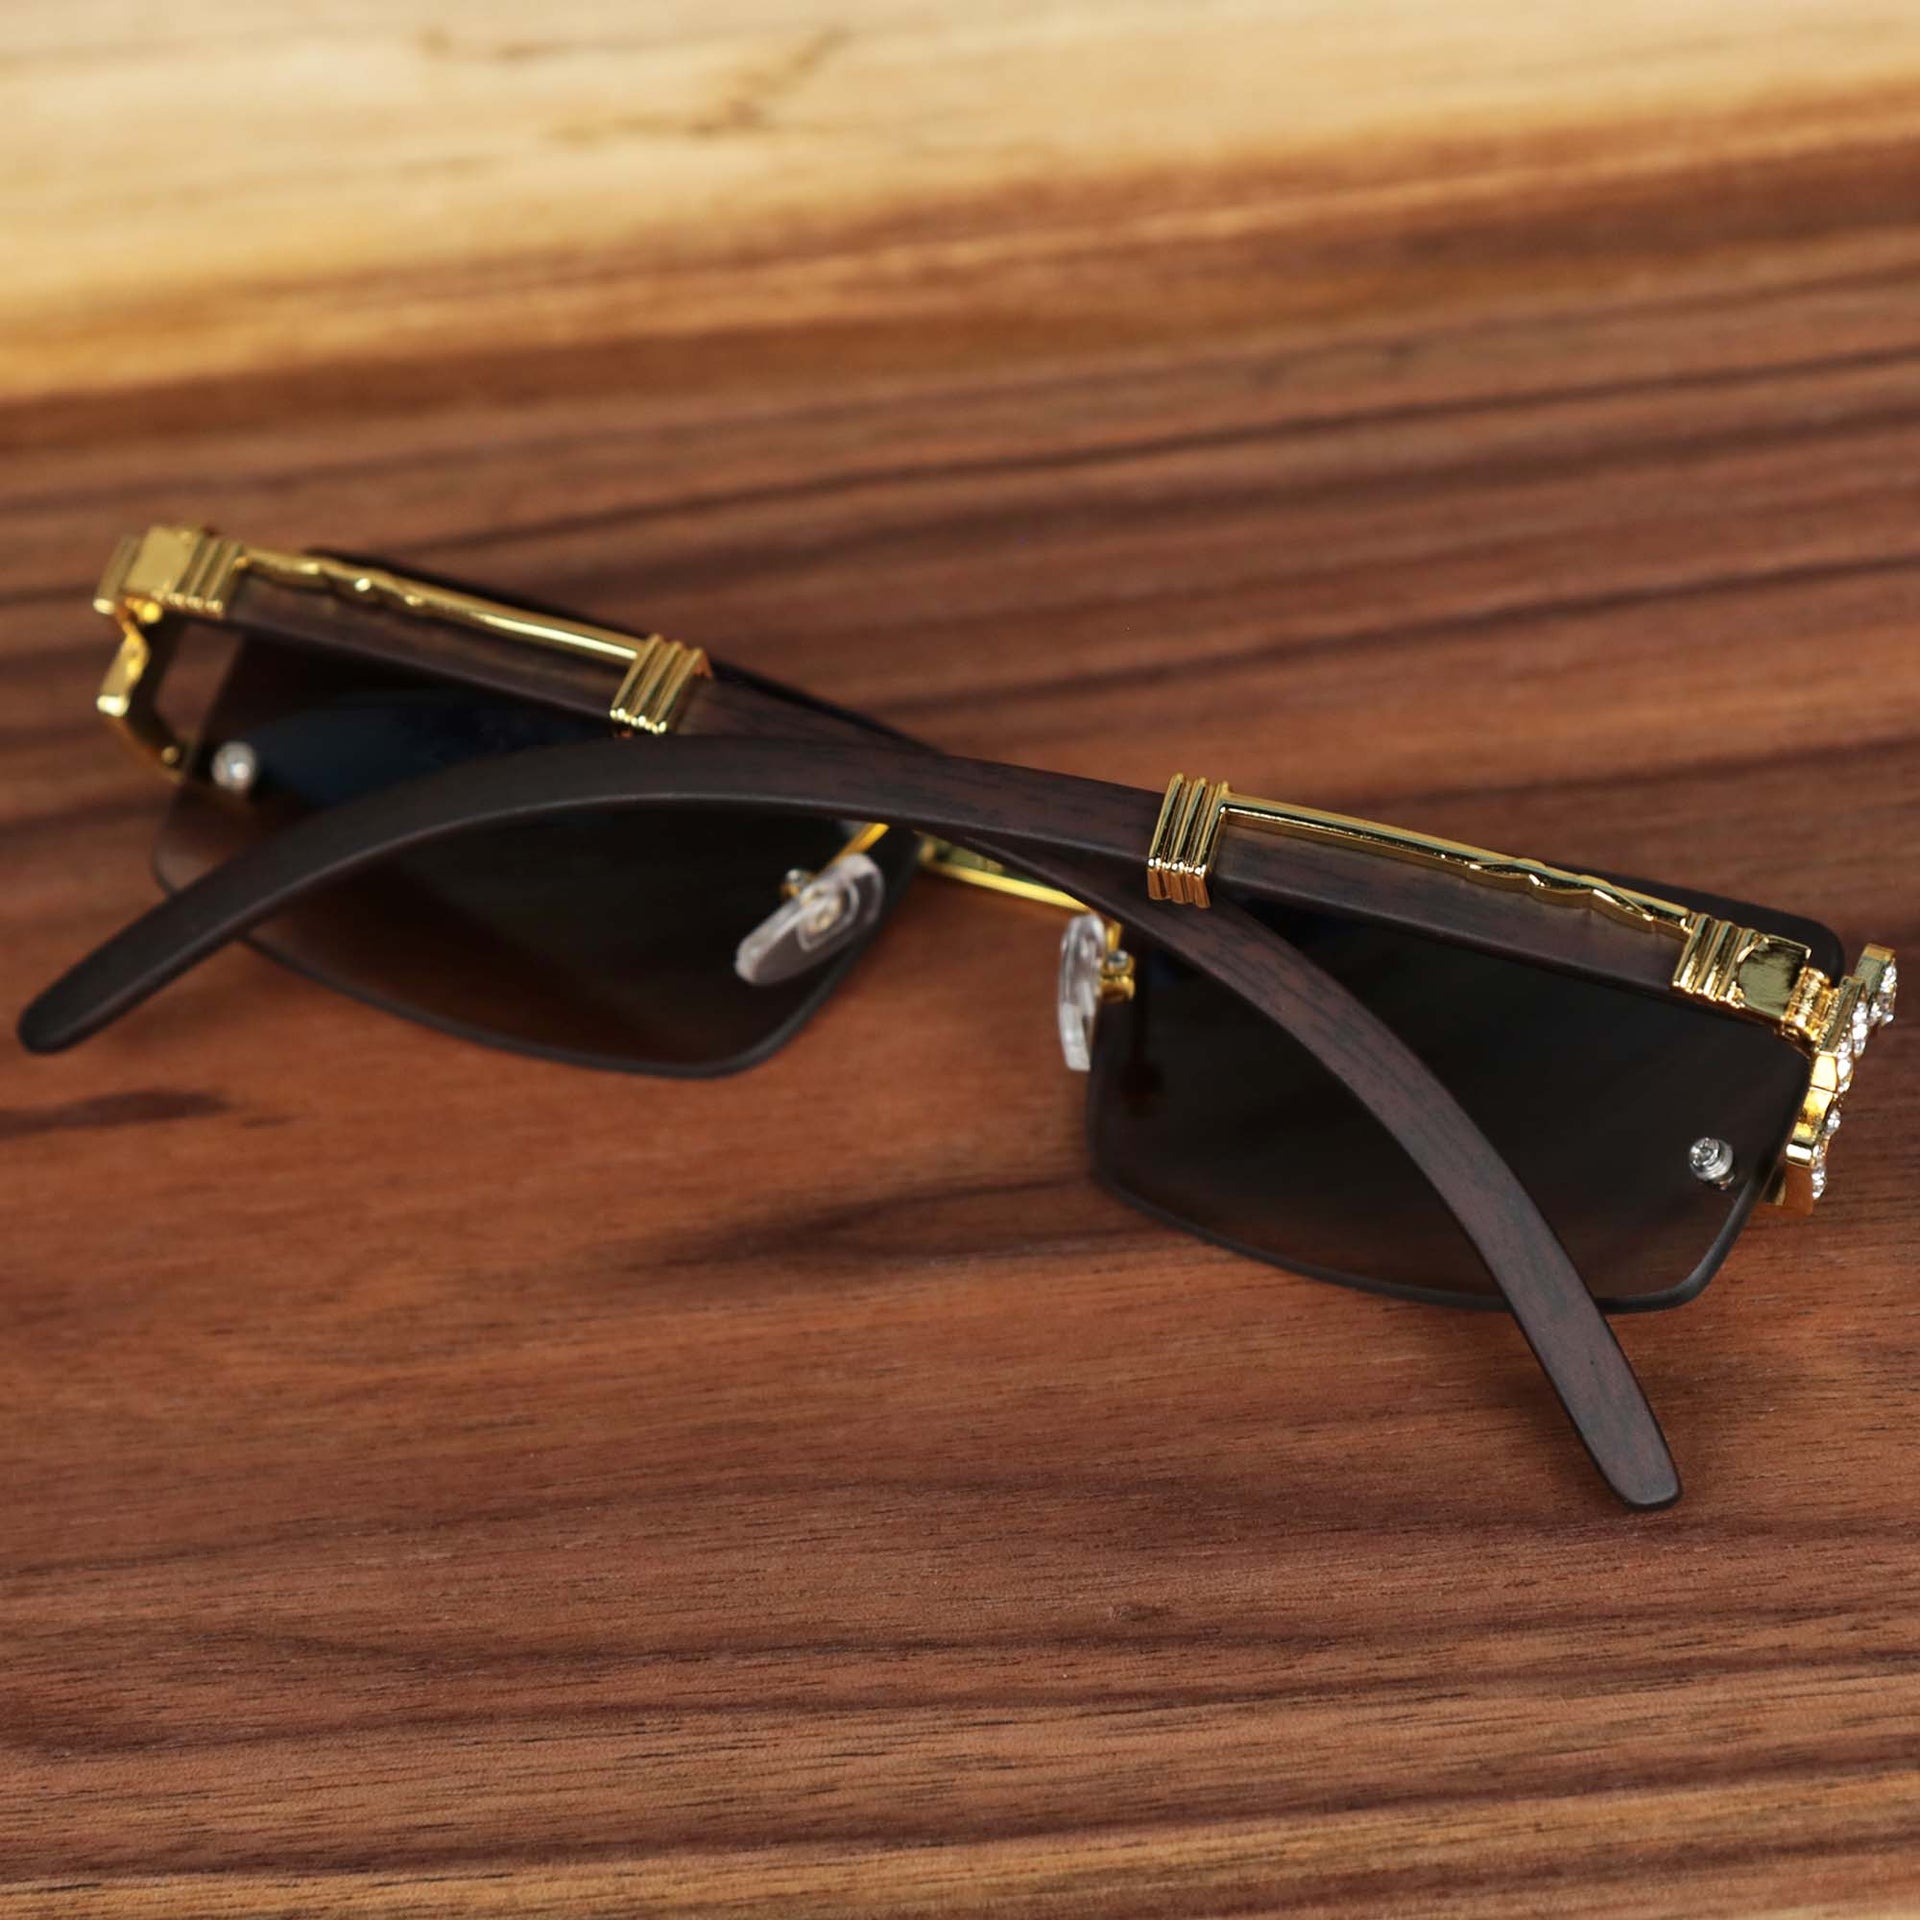 The Rectangle Frames Black Lens Flooded Sunglasses with Gold Frame folded up